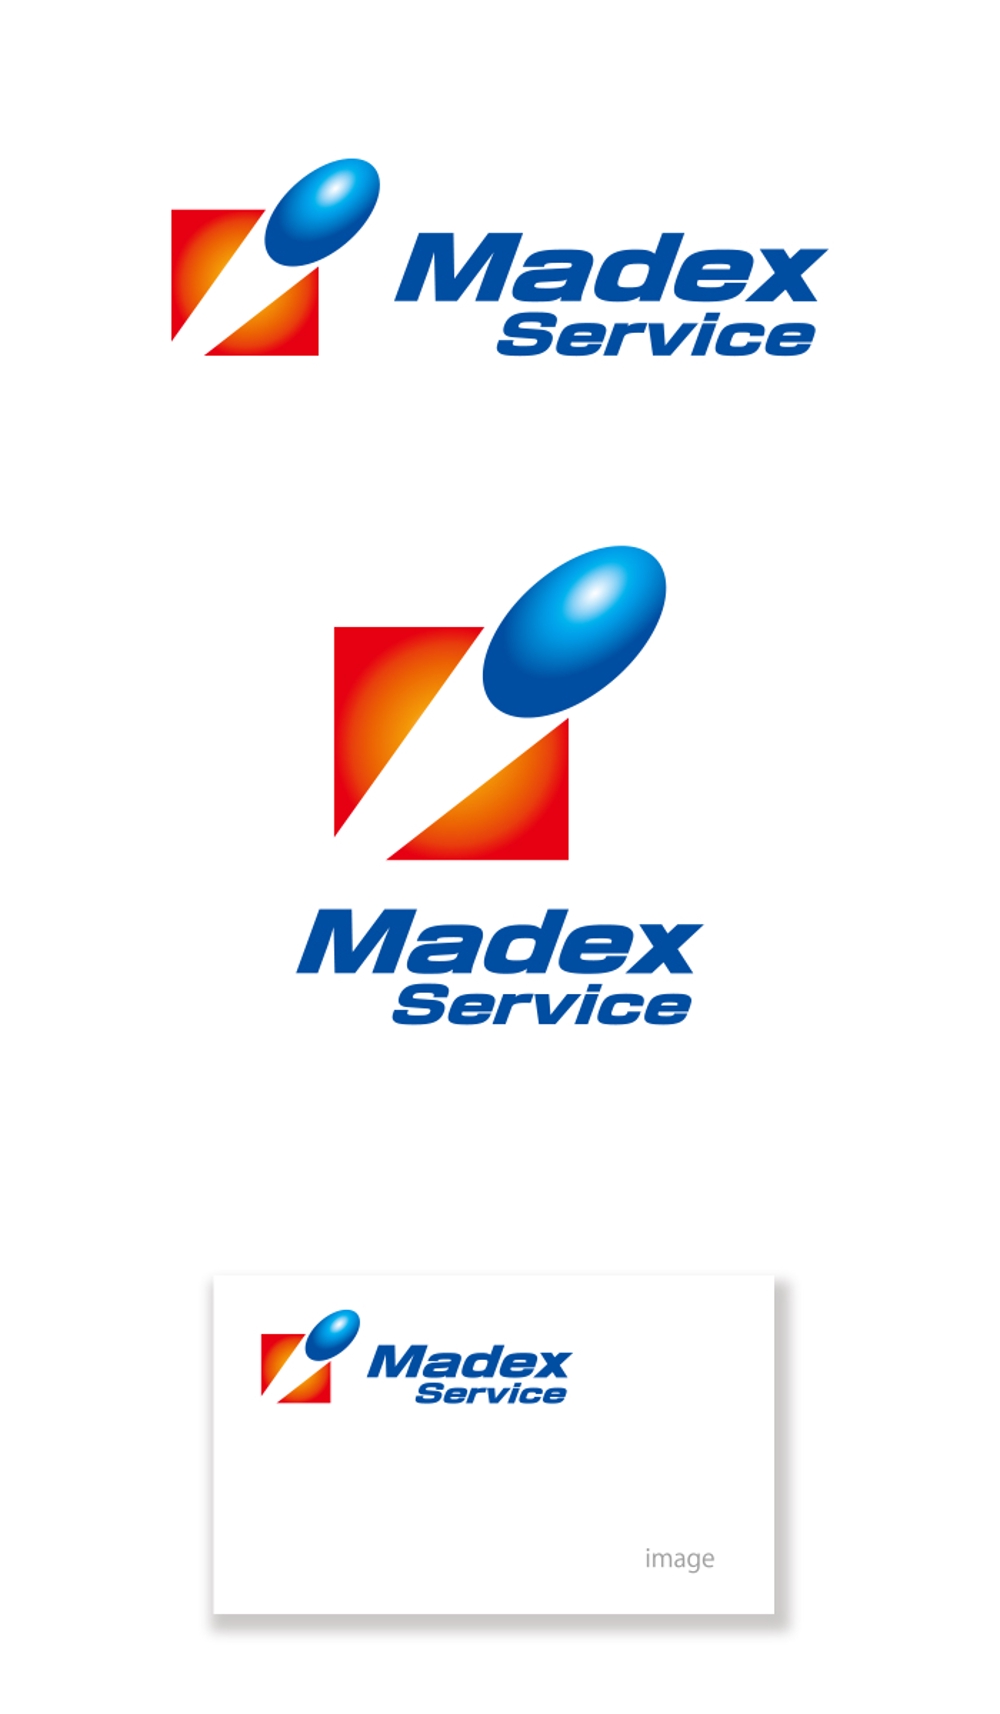 Madex Service logo_serve.jpg